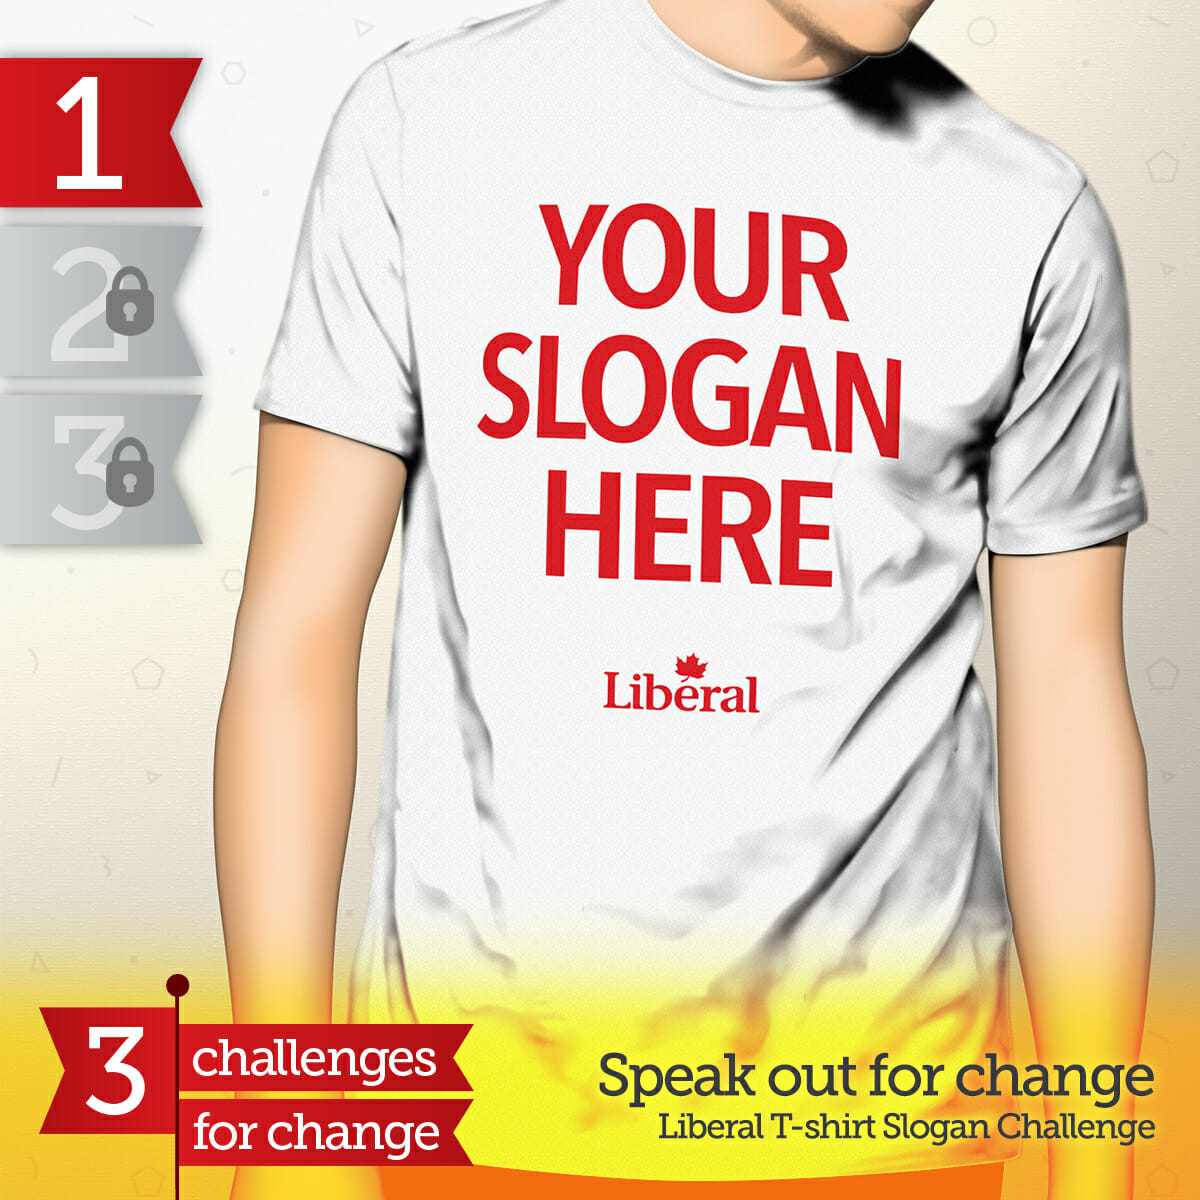 Speak out for change - Liberal T-shirt slogan challenge